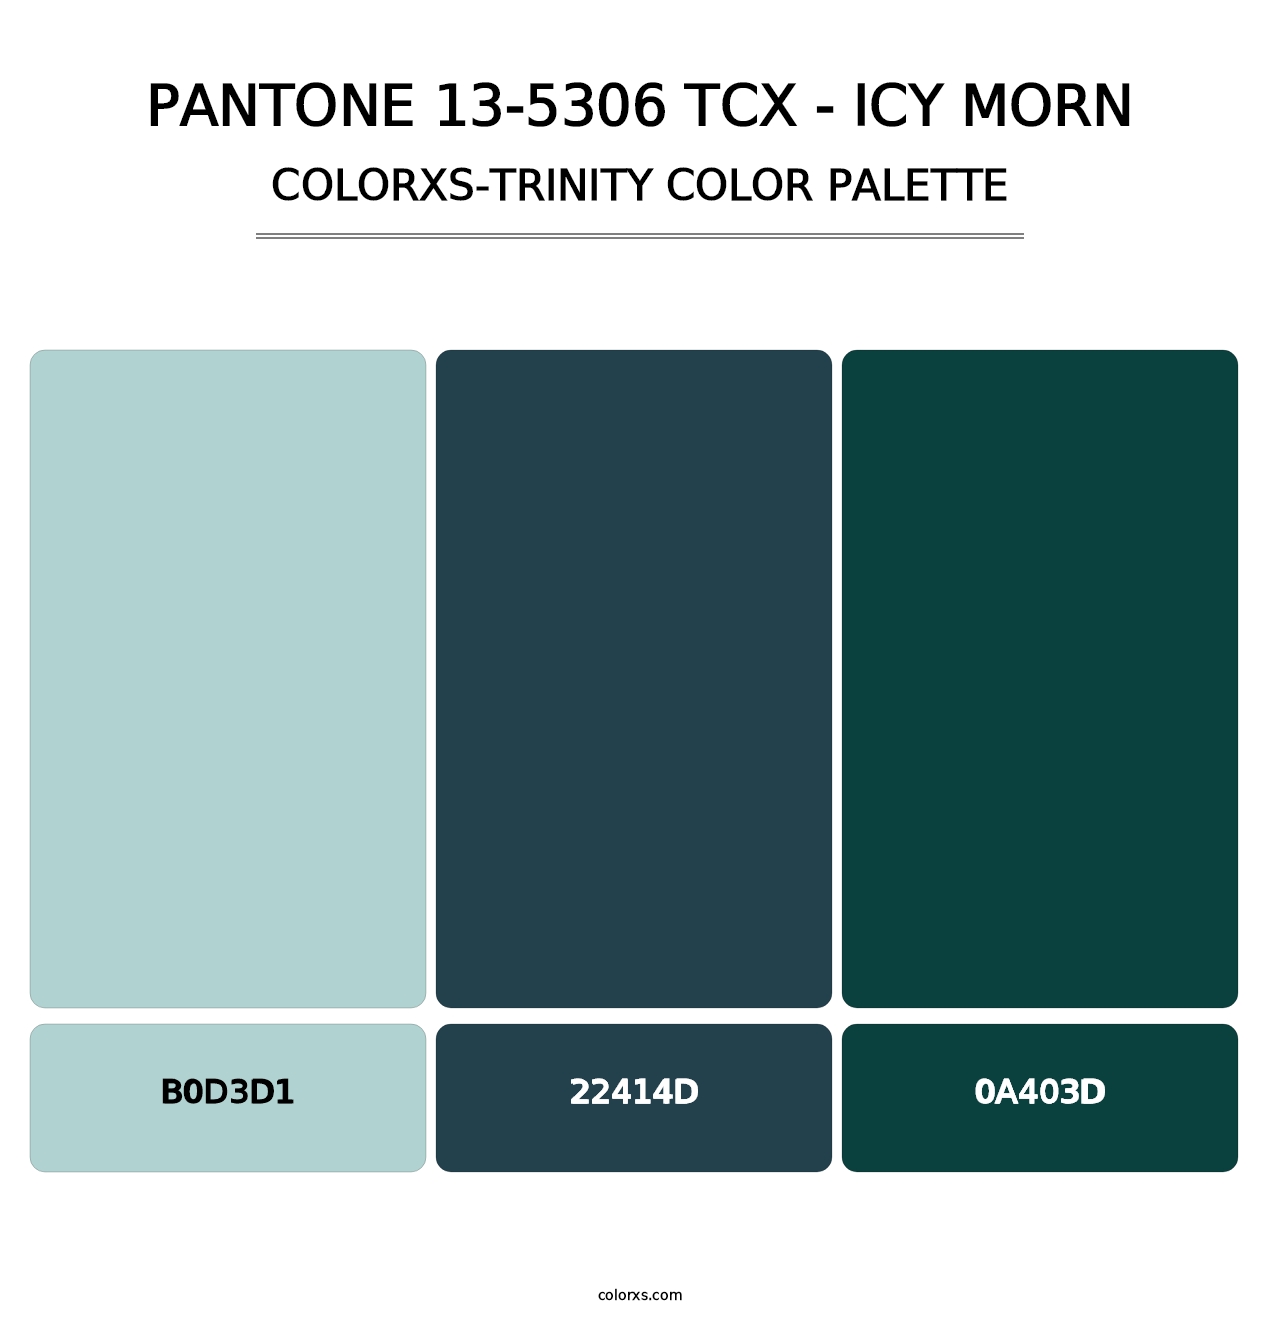 PANTONE 13-5306 TCX - Icy Morn - Colorxs Trinity Palette